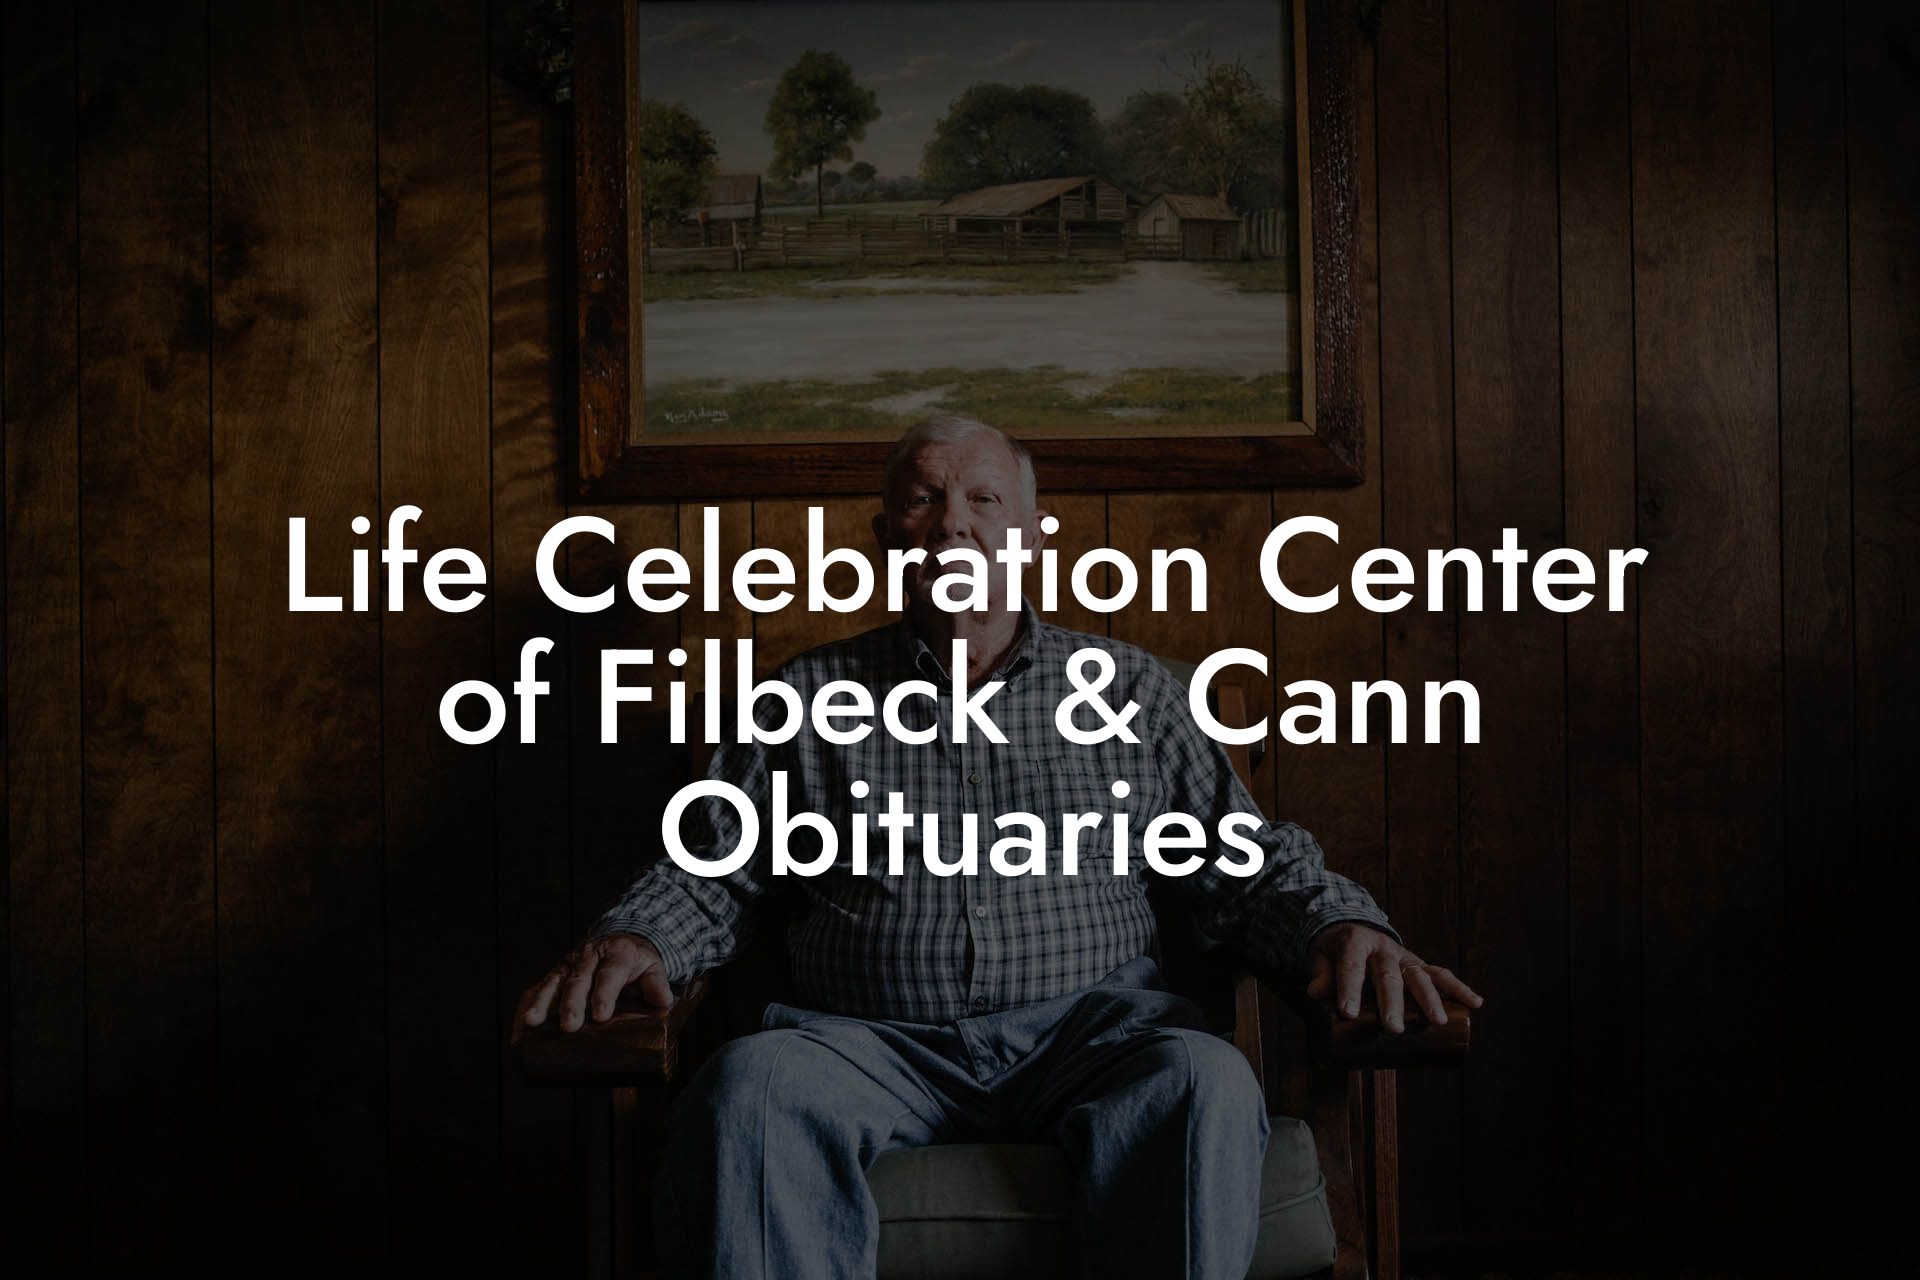 Life Celebration Center of Filbeck & Cann Obituaries